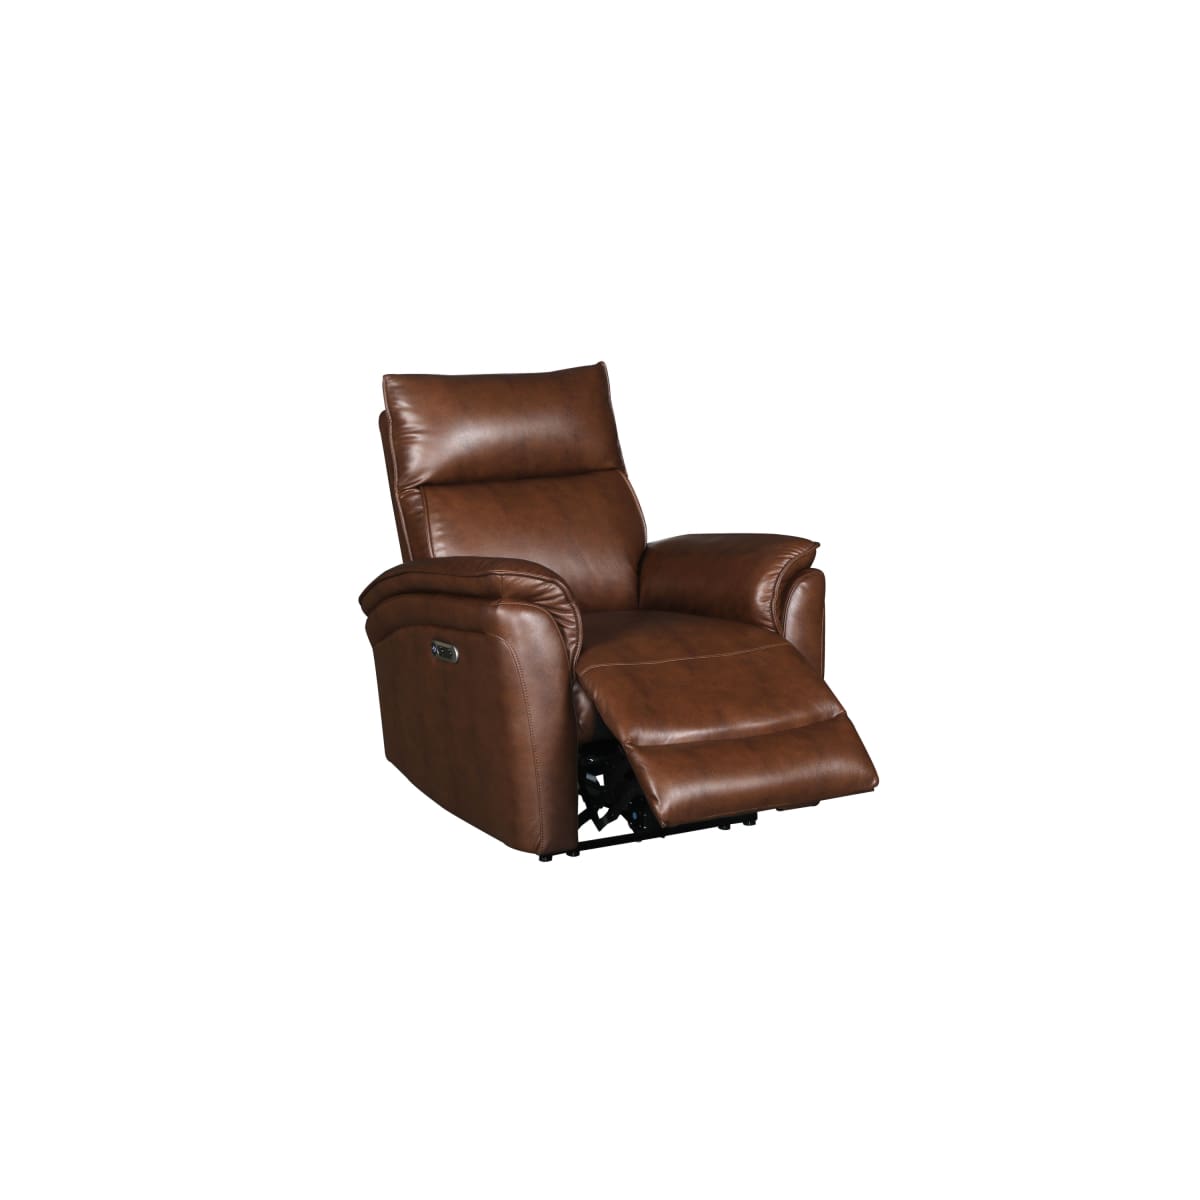 Furniture Barn - Roland Brown Power Recliner Chair